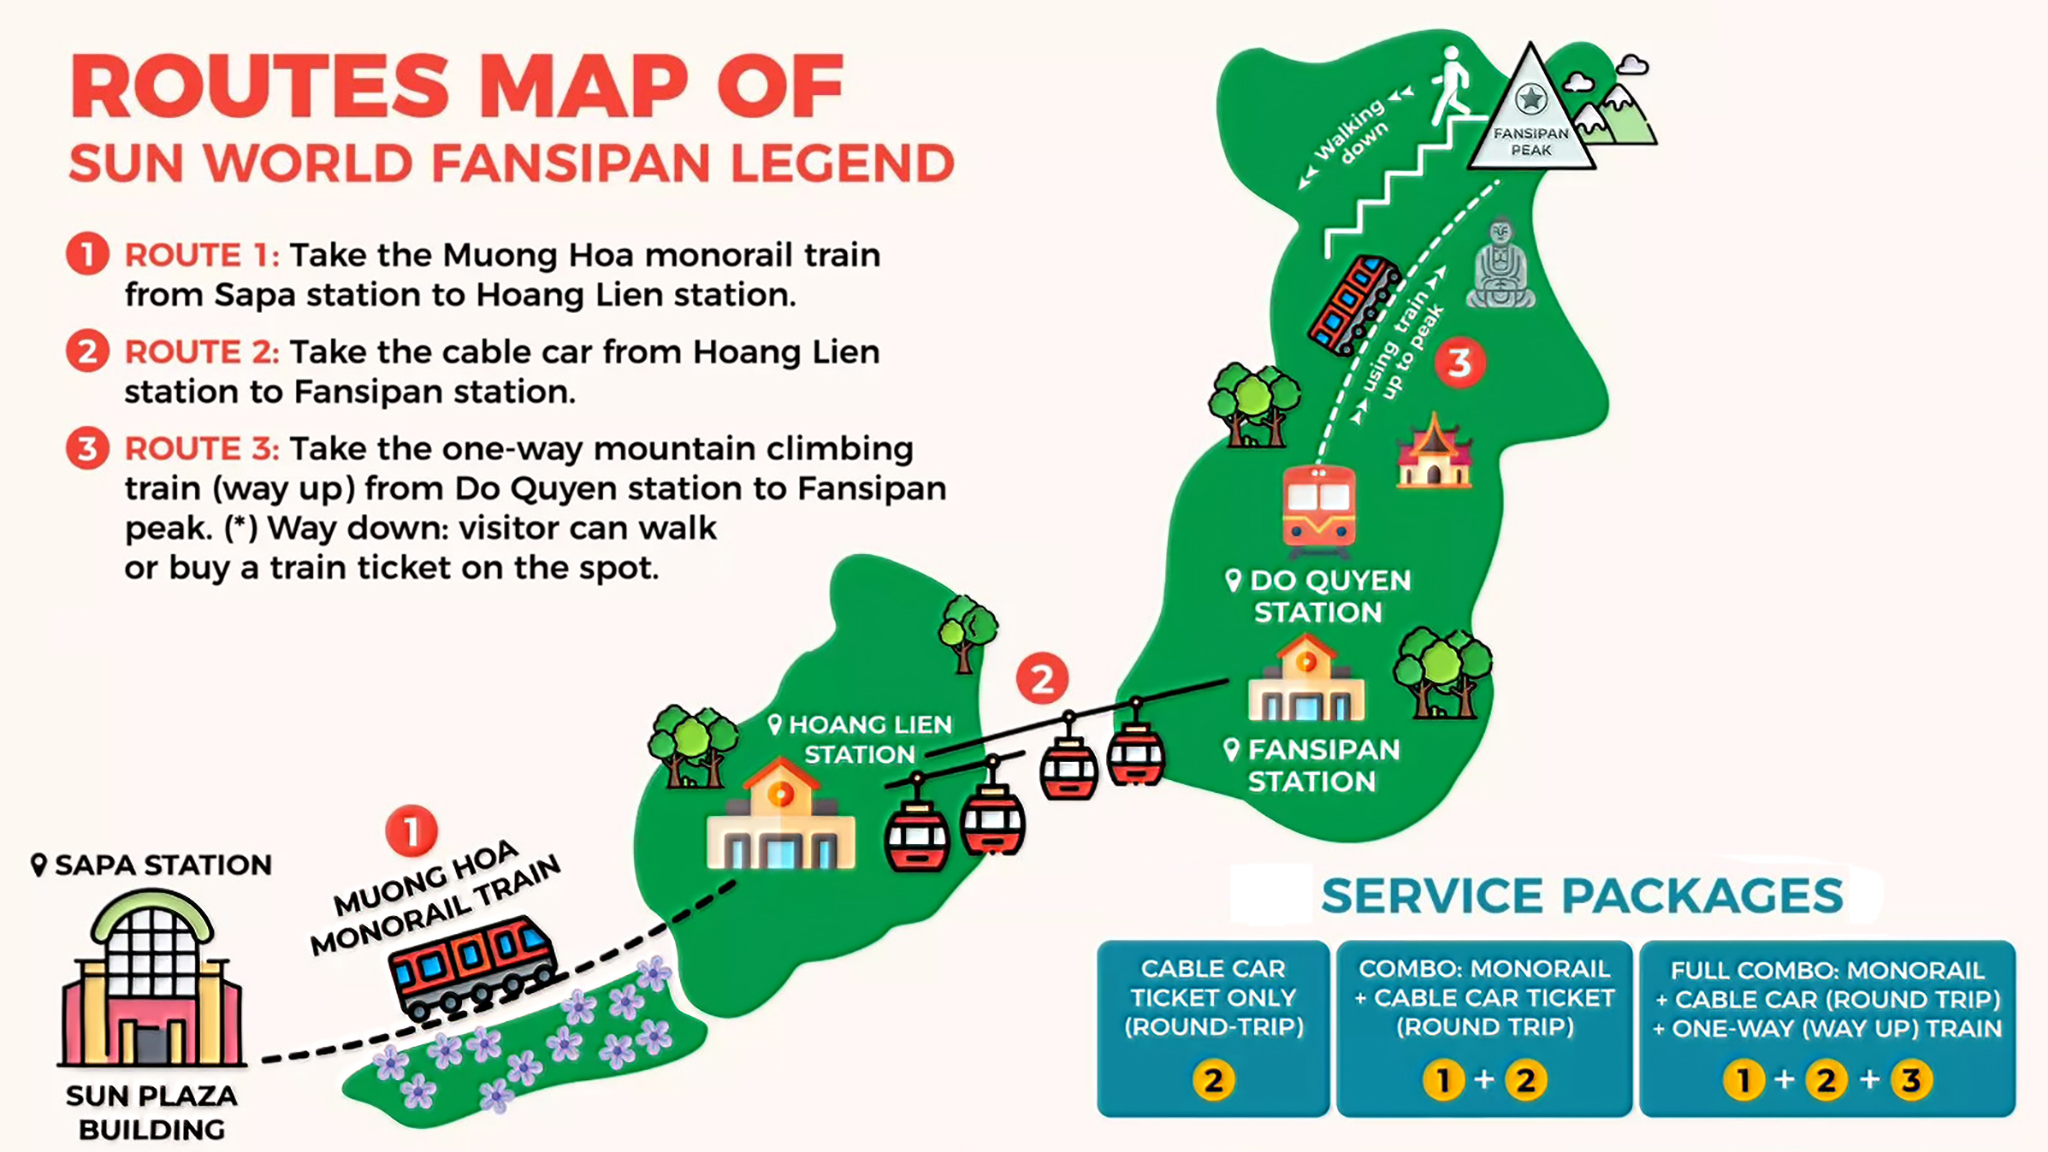 Route Map of Sun World Fansipan Legend